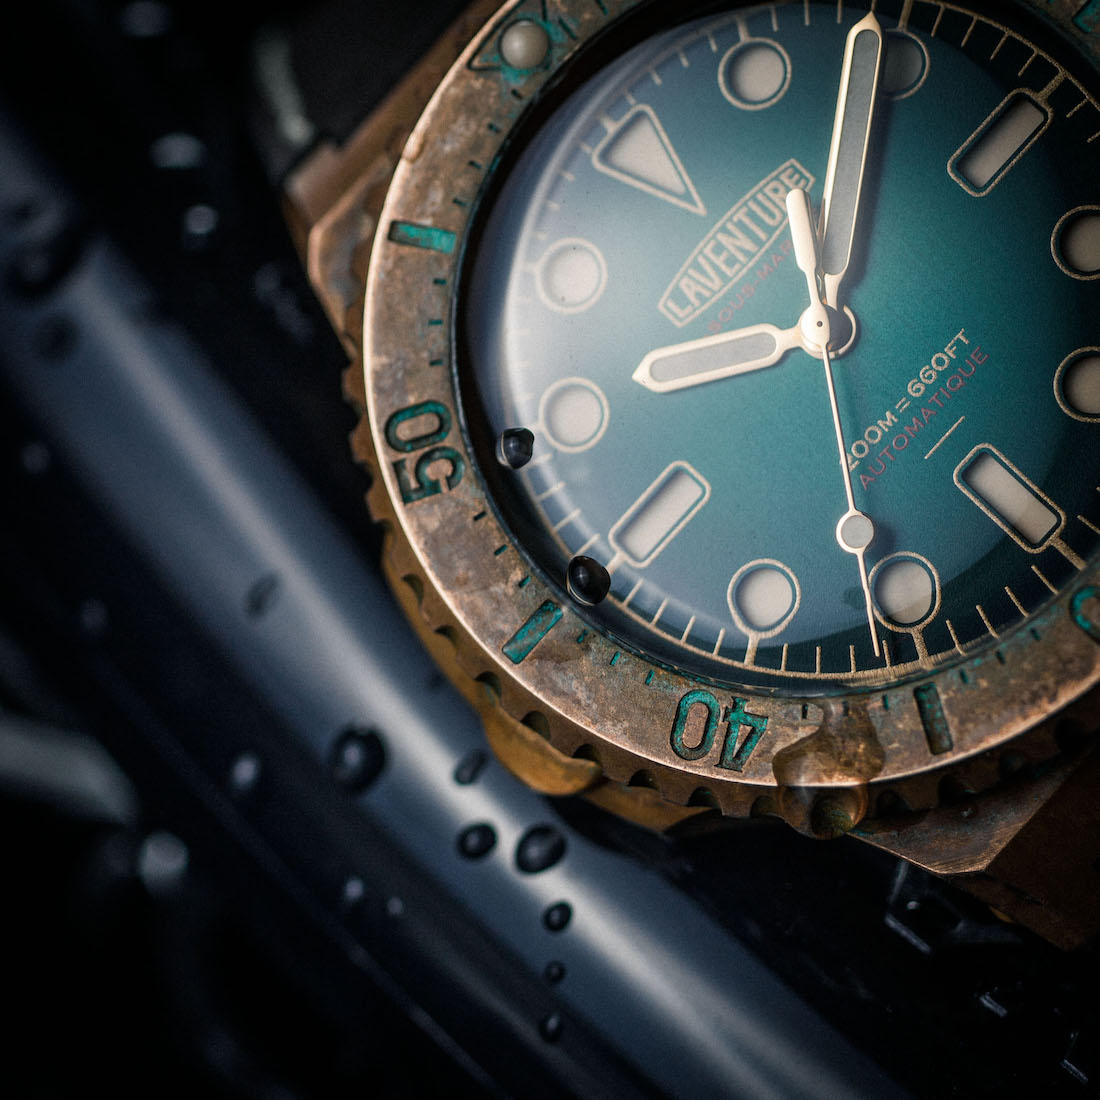 Laventure-Sous-Marine-Bronze-Watch-Aged-Green-Patina